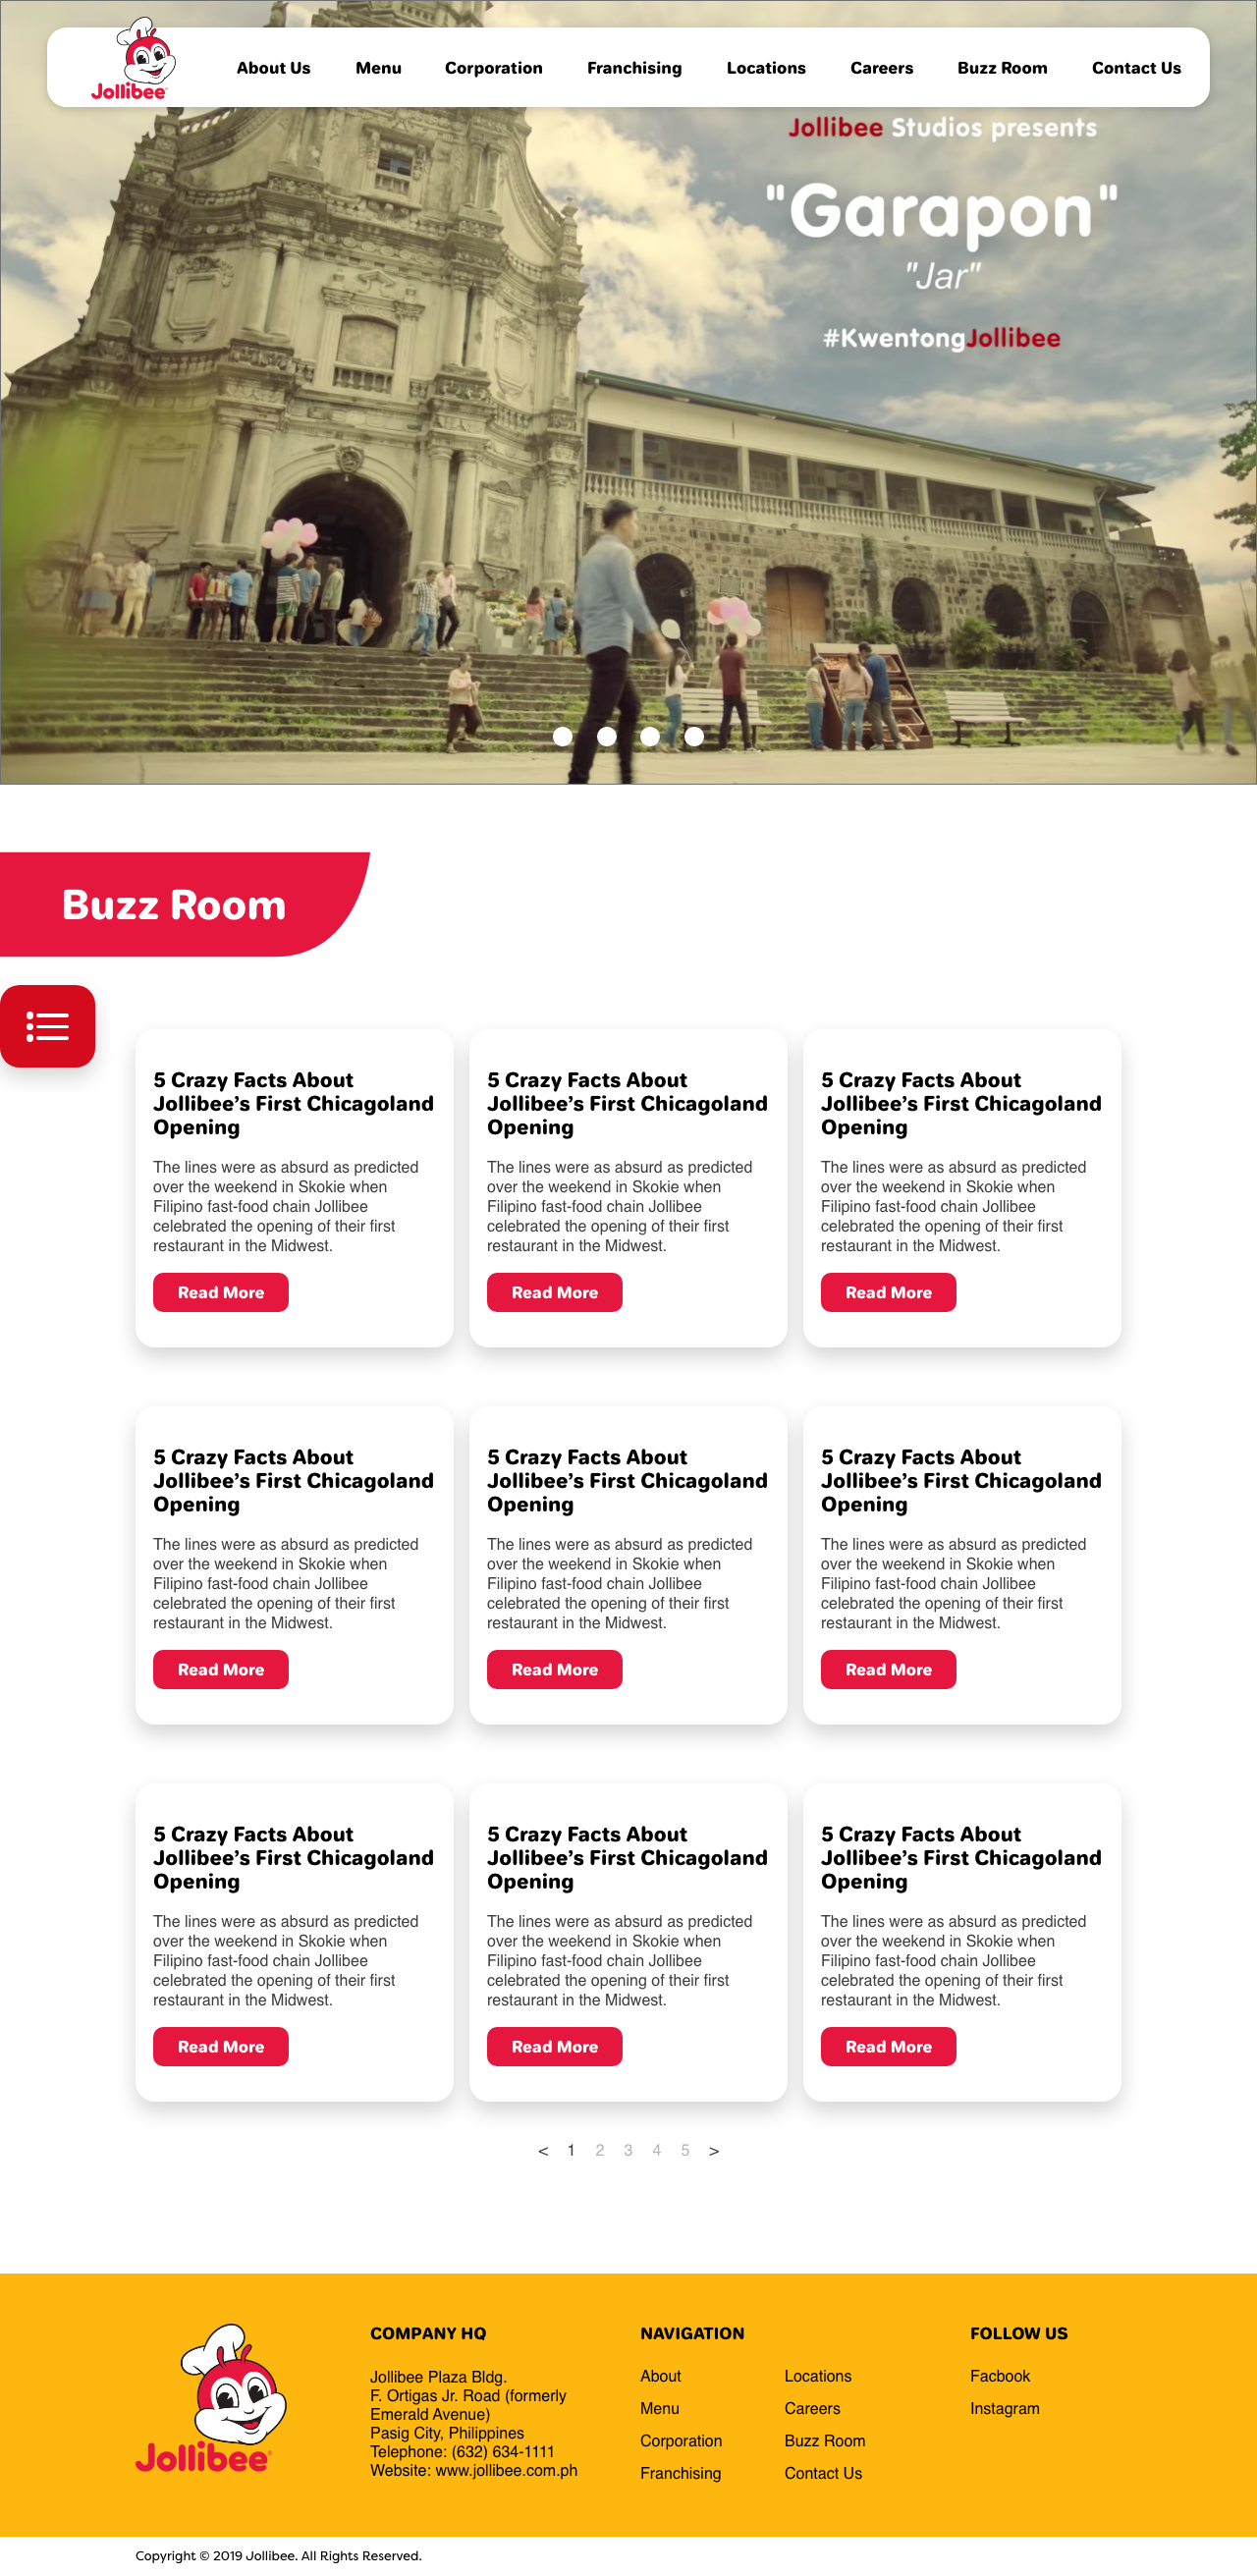 Buzz-Room